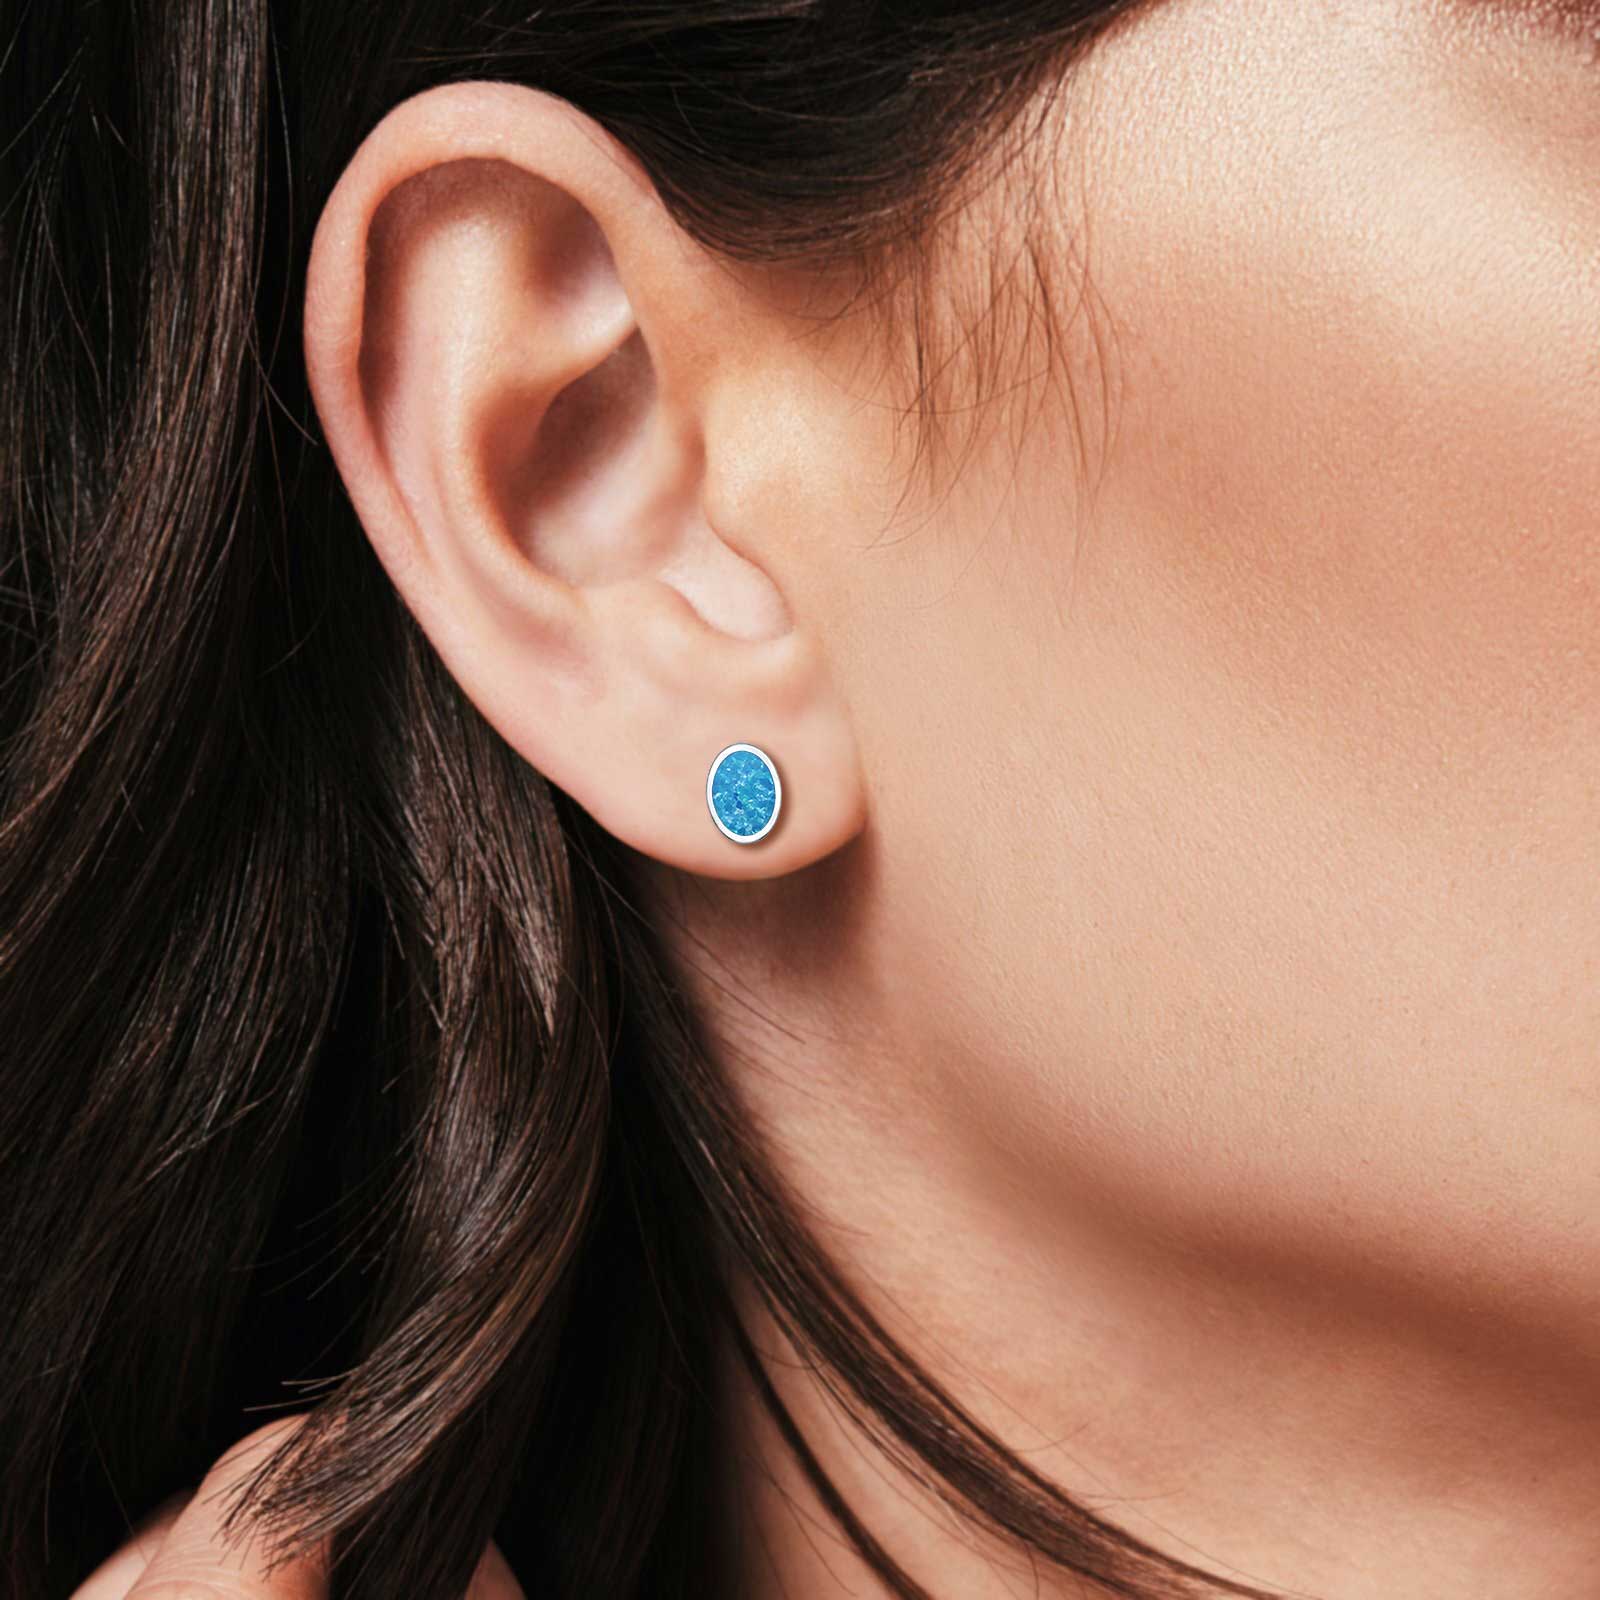 Oval Stud Earrings Lab Created Blue Opal 925 Sterling Silver (6mm-12mm)